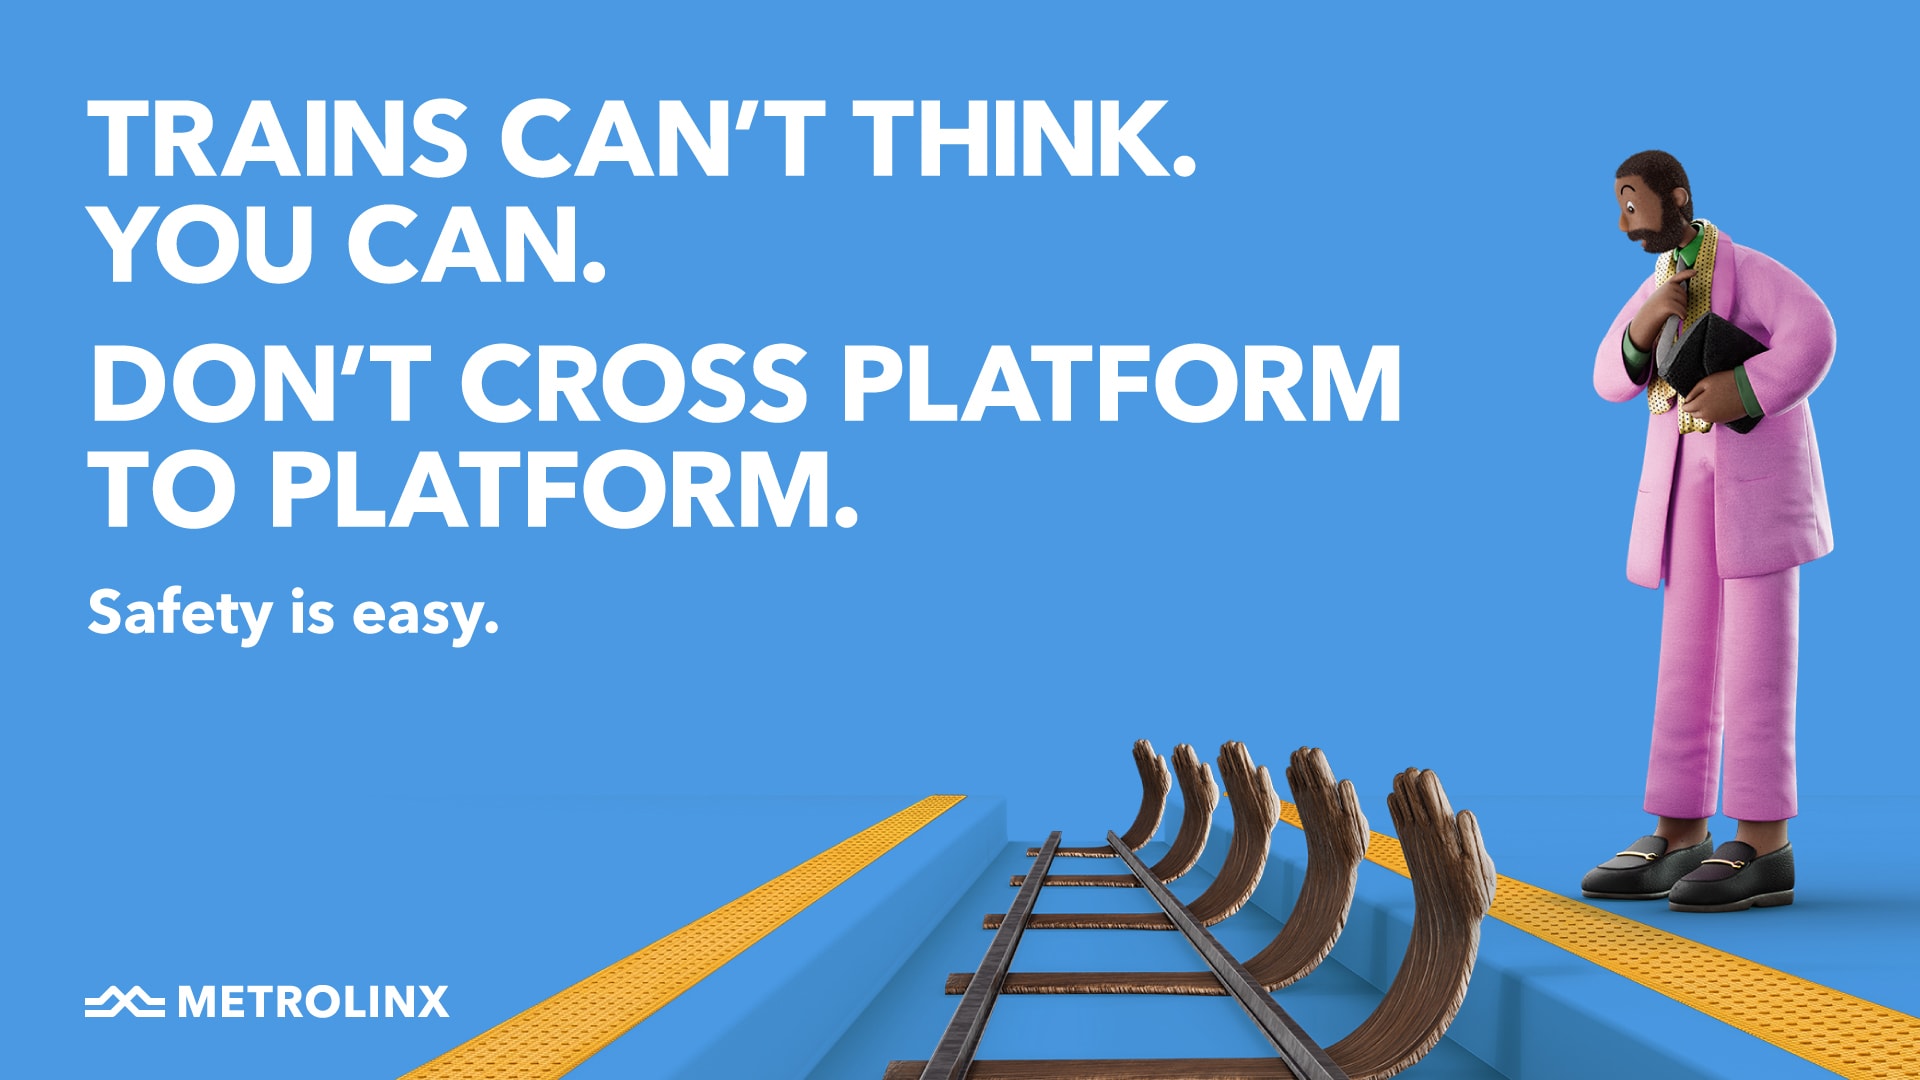 Don't cross platform to platform.